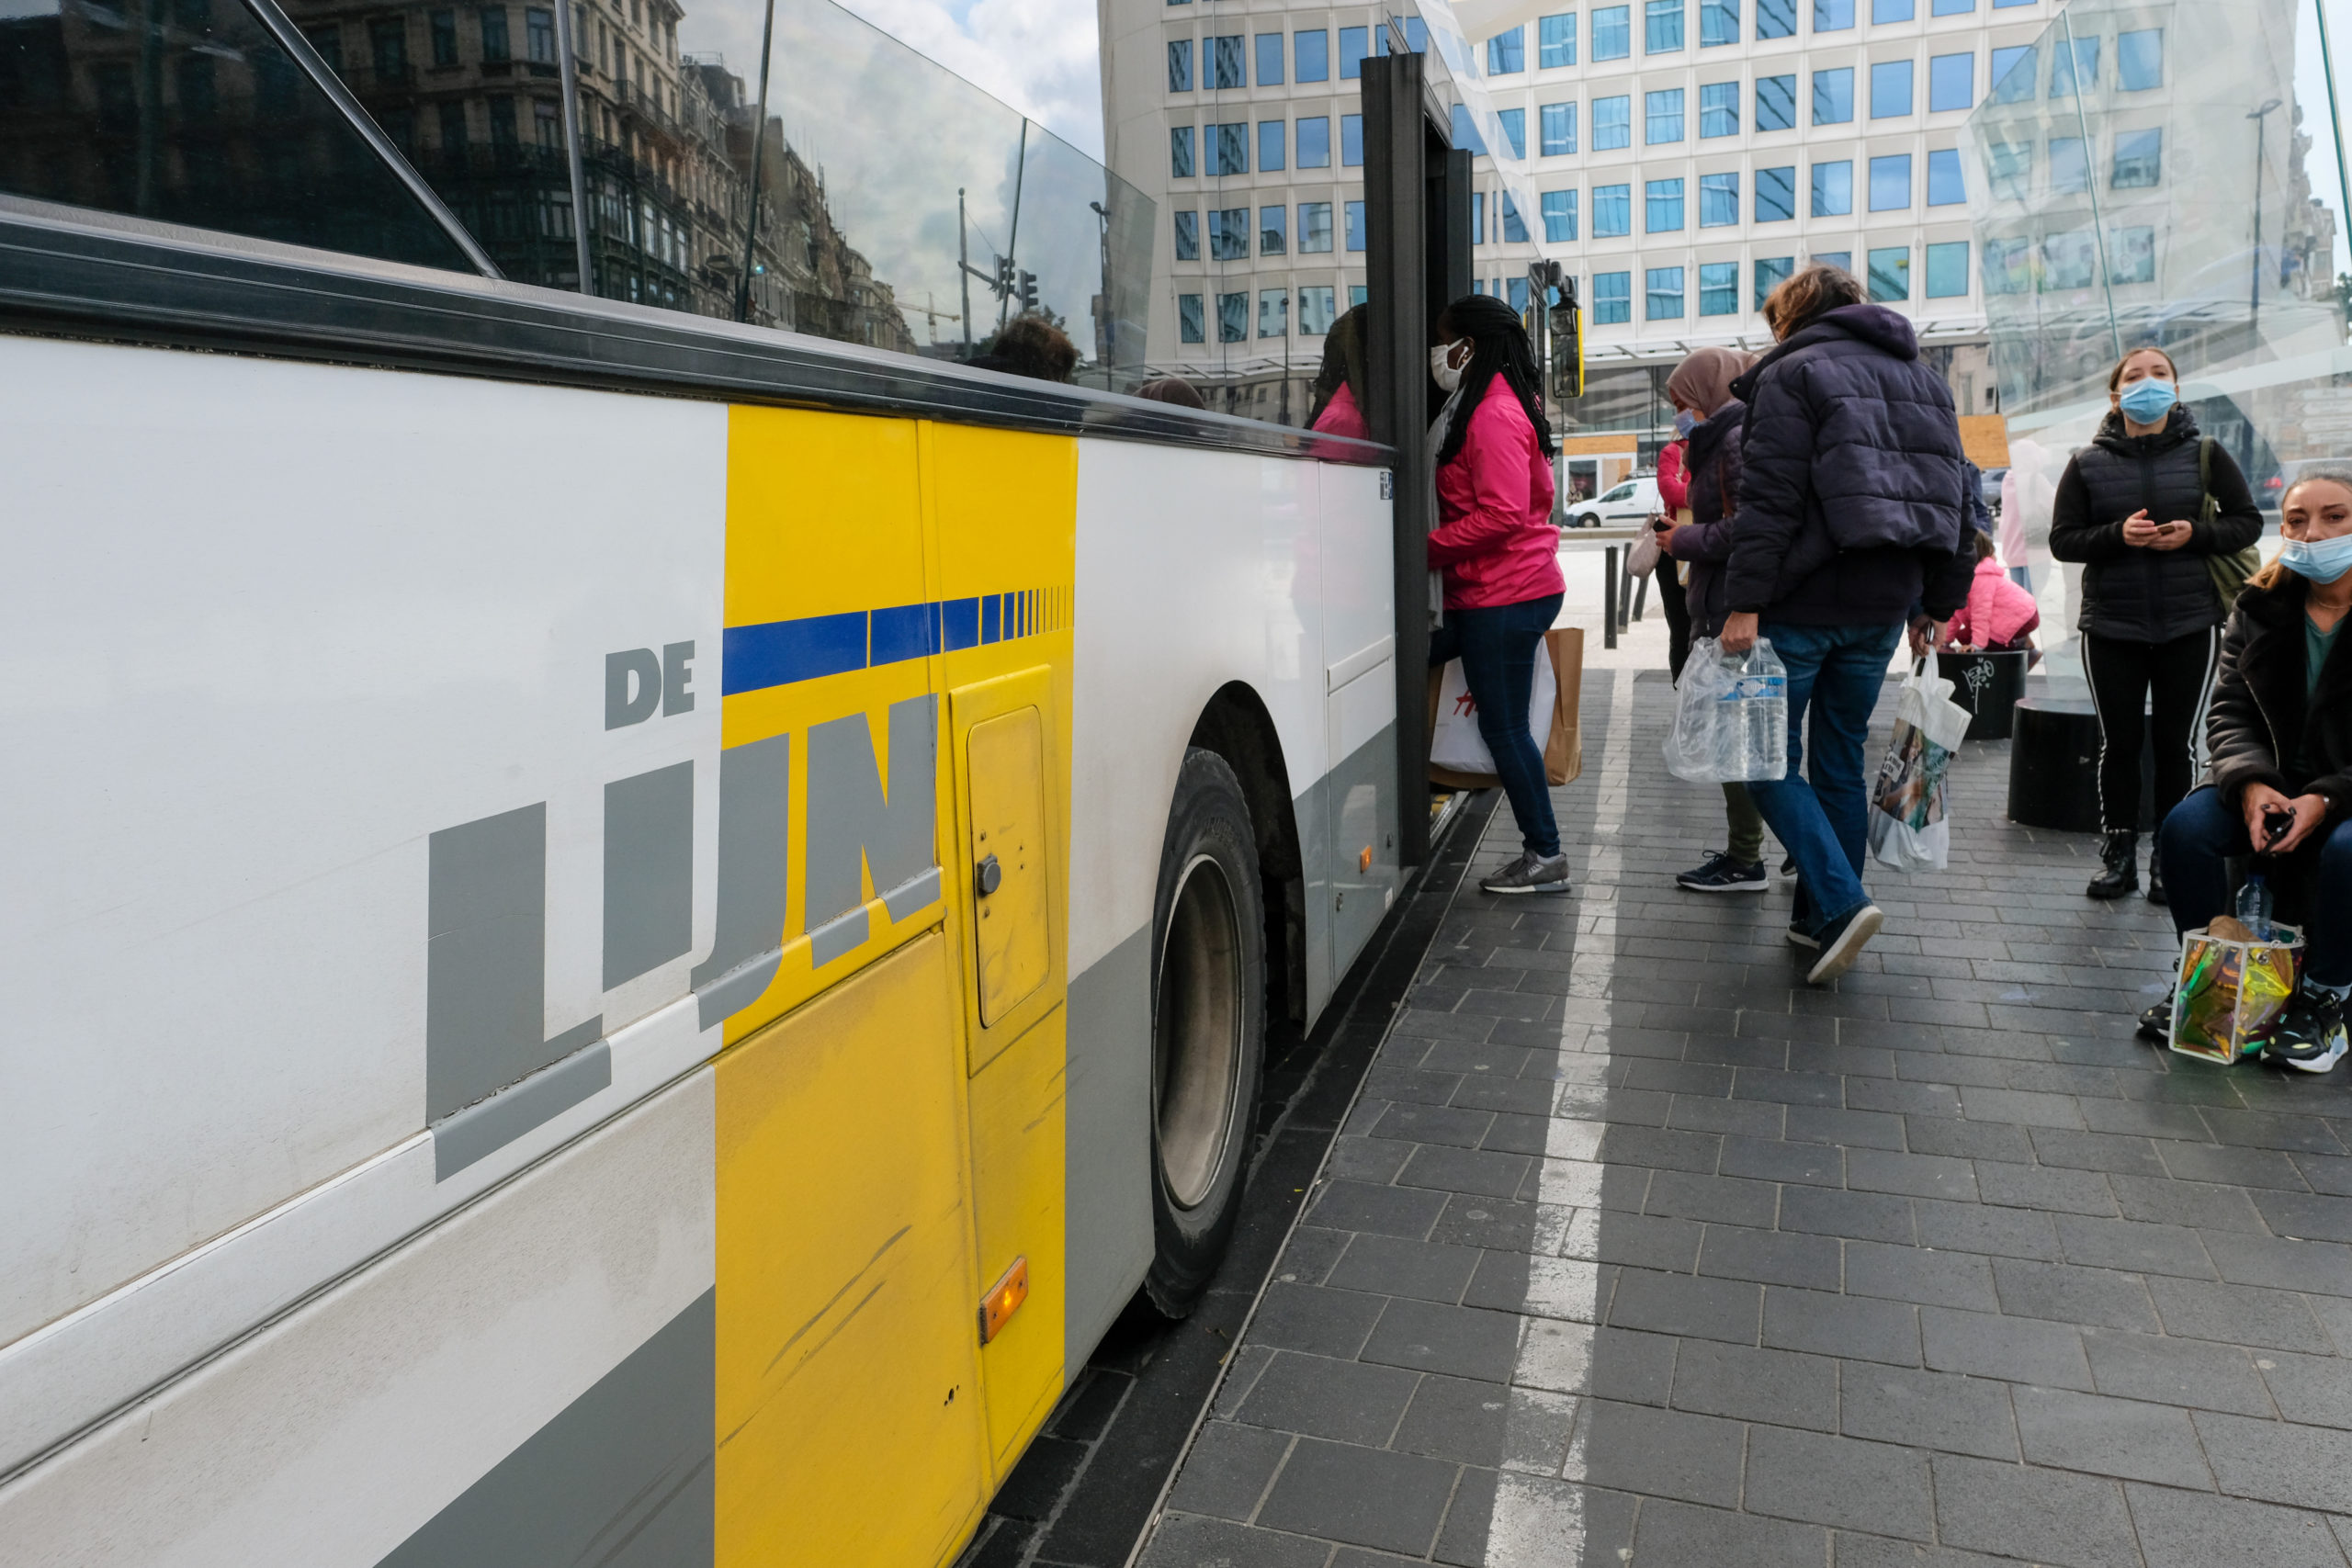 De Lijn: ‘pause system’ for annual commutation ticket